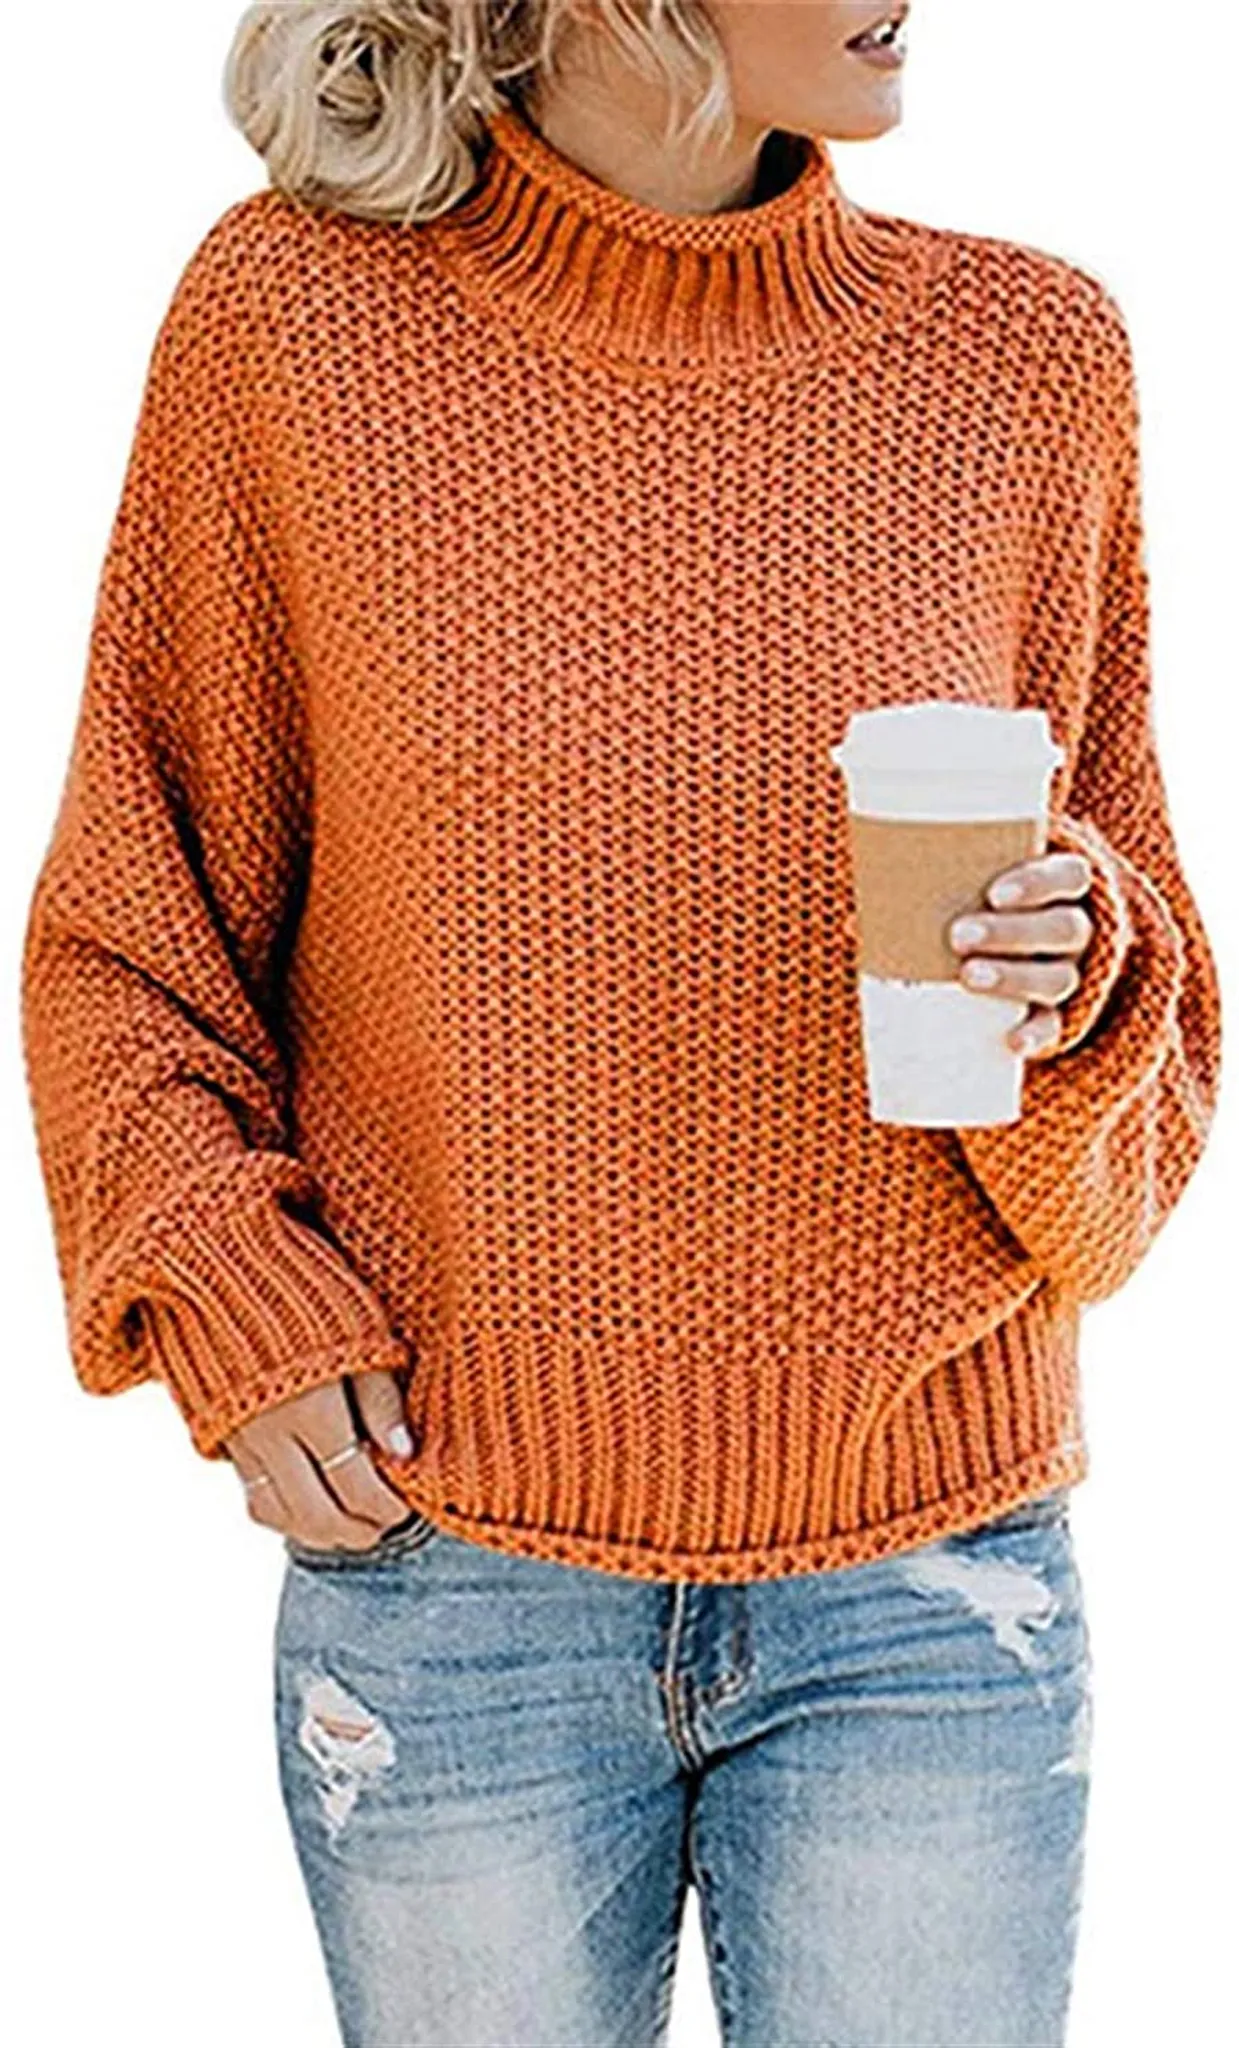 Pulli Pullover Sweatshirt, Einfarbig Strickpullover Orange, Rollkragenpullover M ASKSA Damen Knit